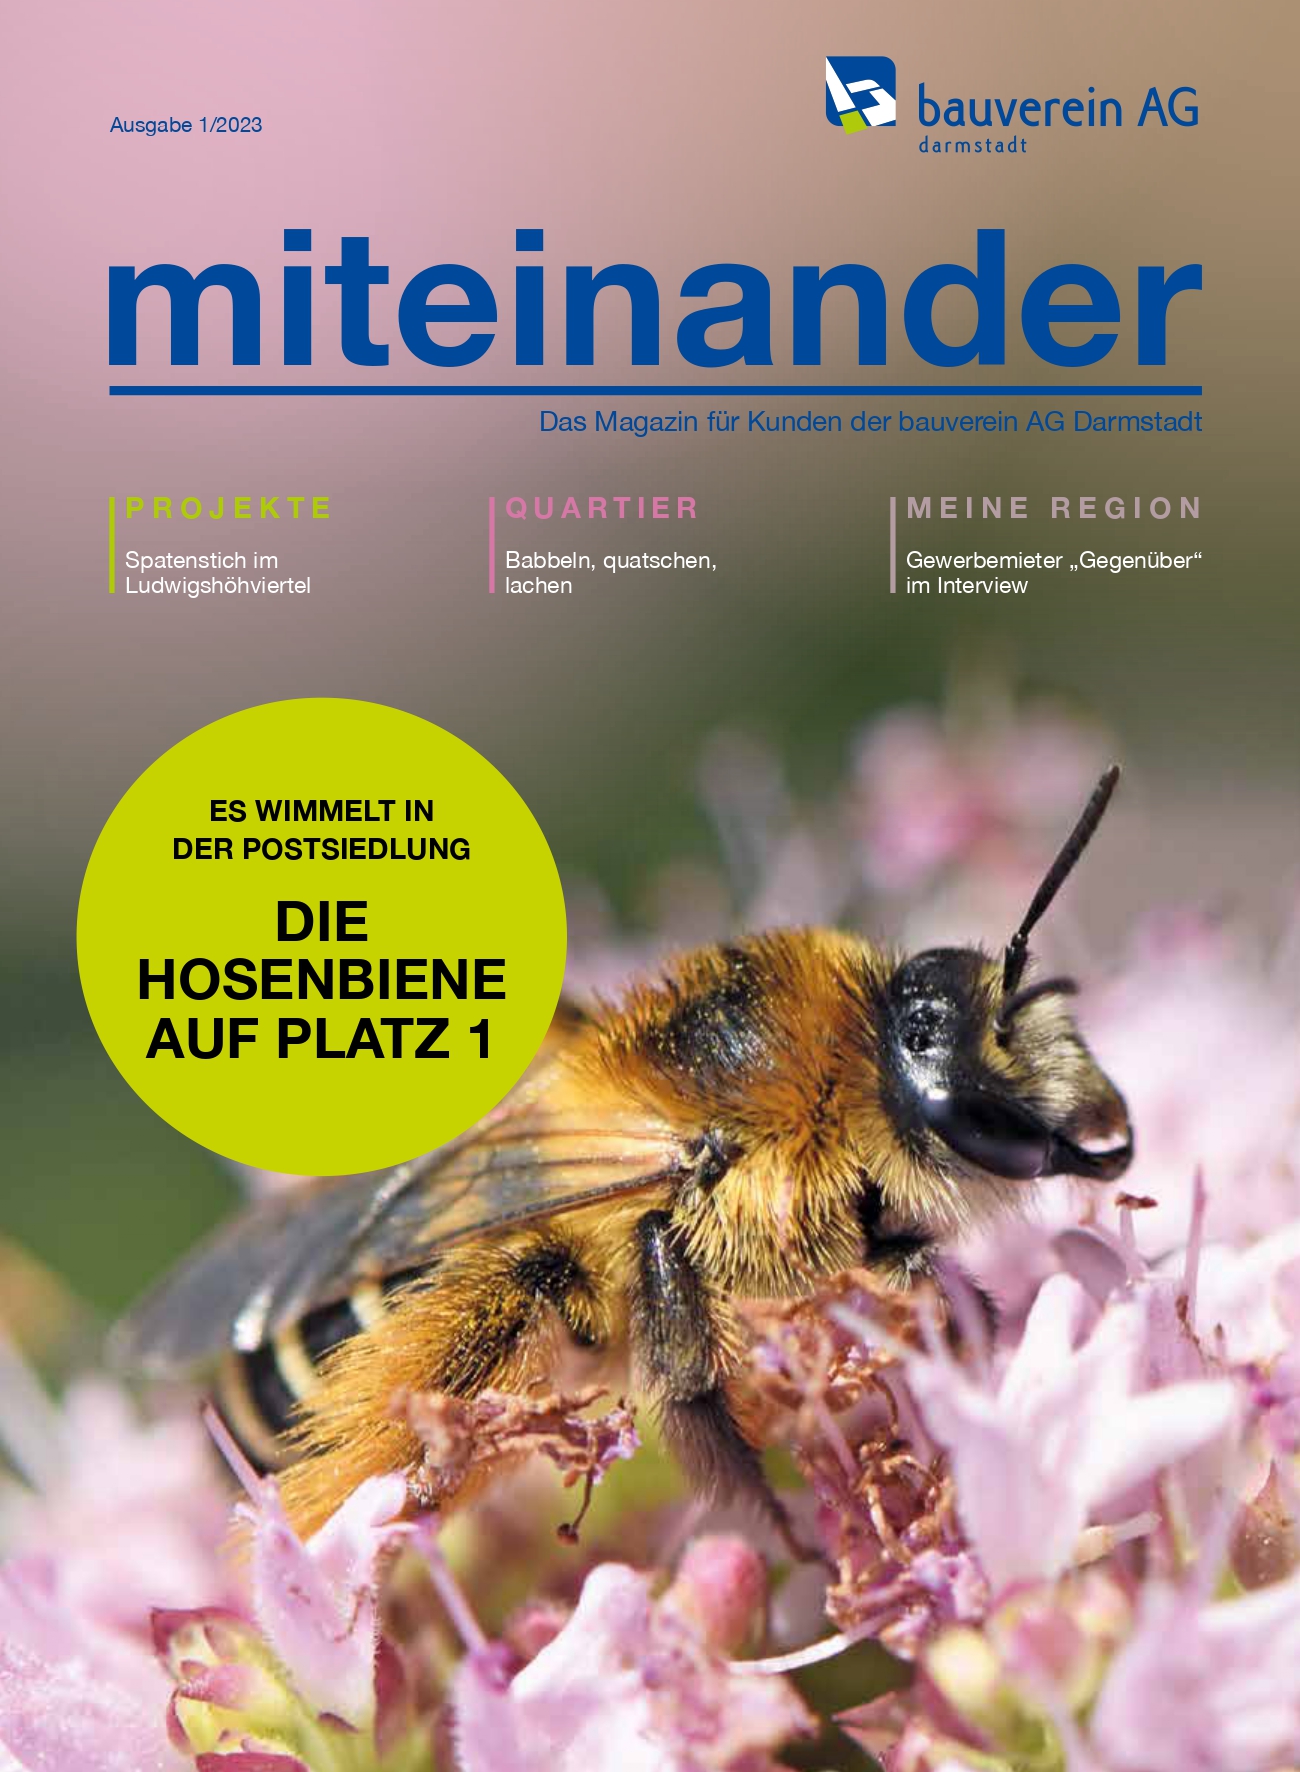 You are currently viewing Biotop: Toller Artikel in neuer Mieterzeitung der Bauverein AG!